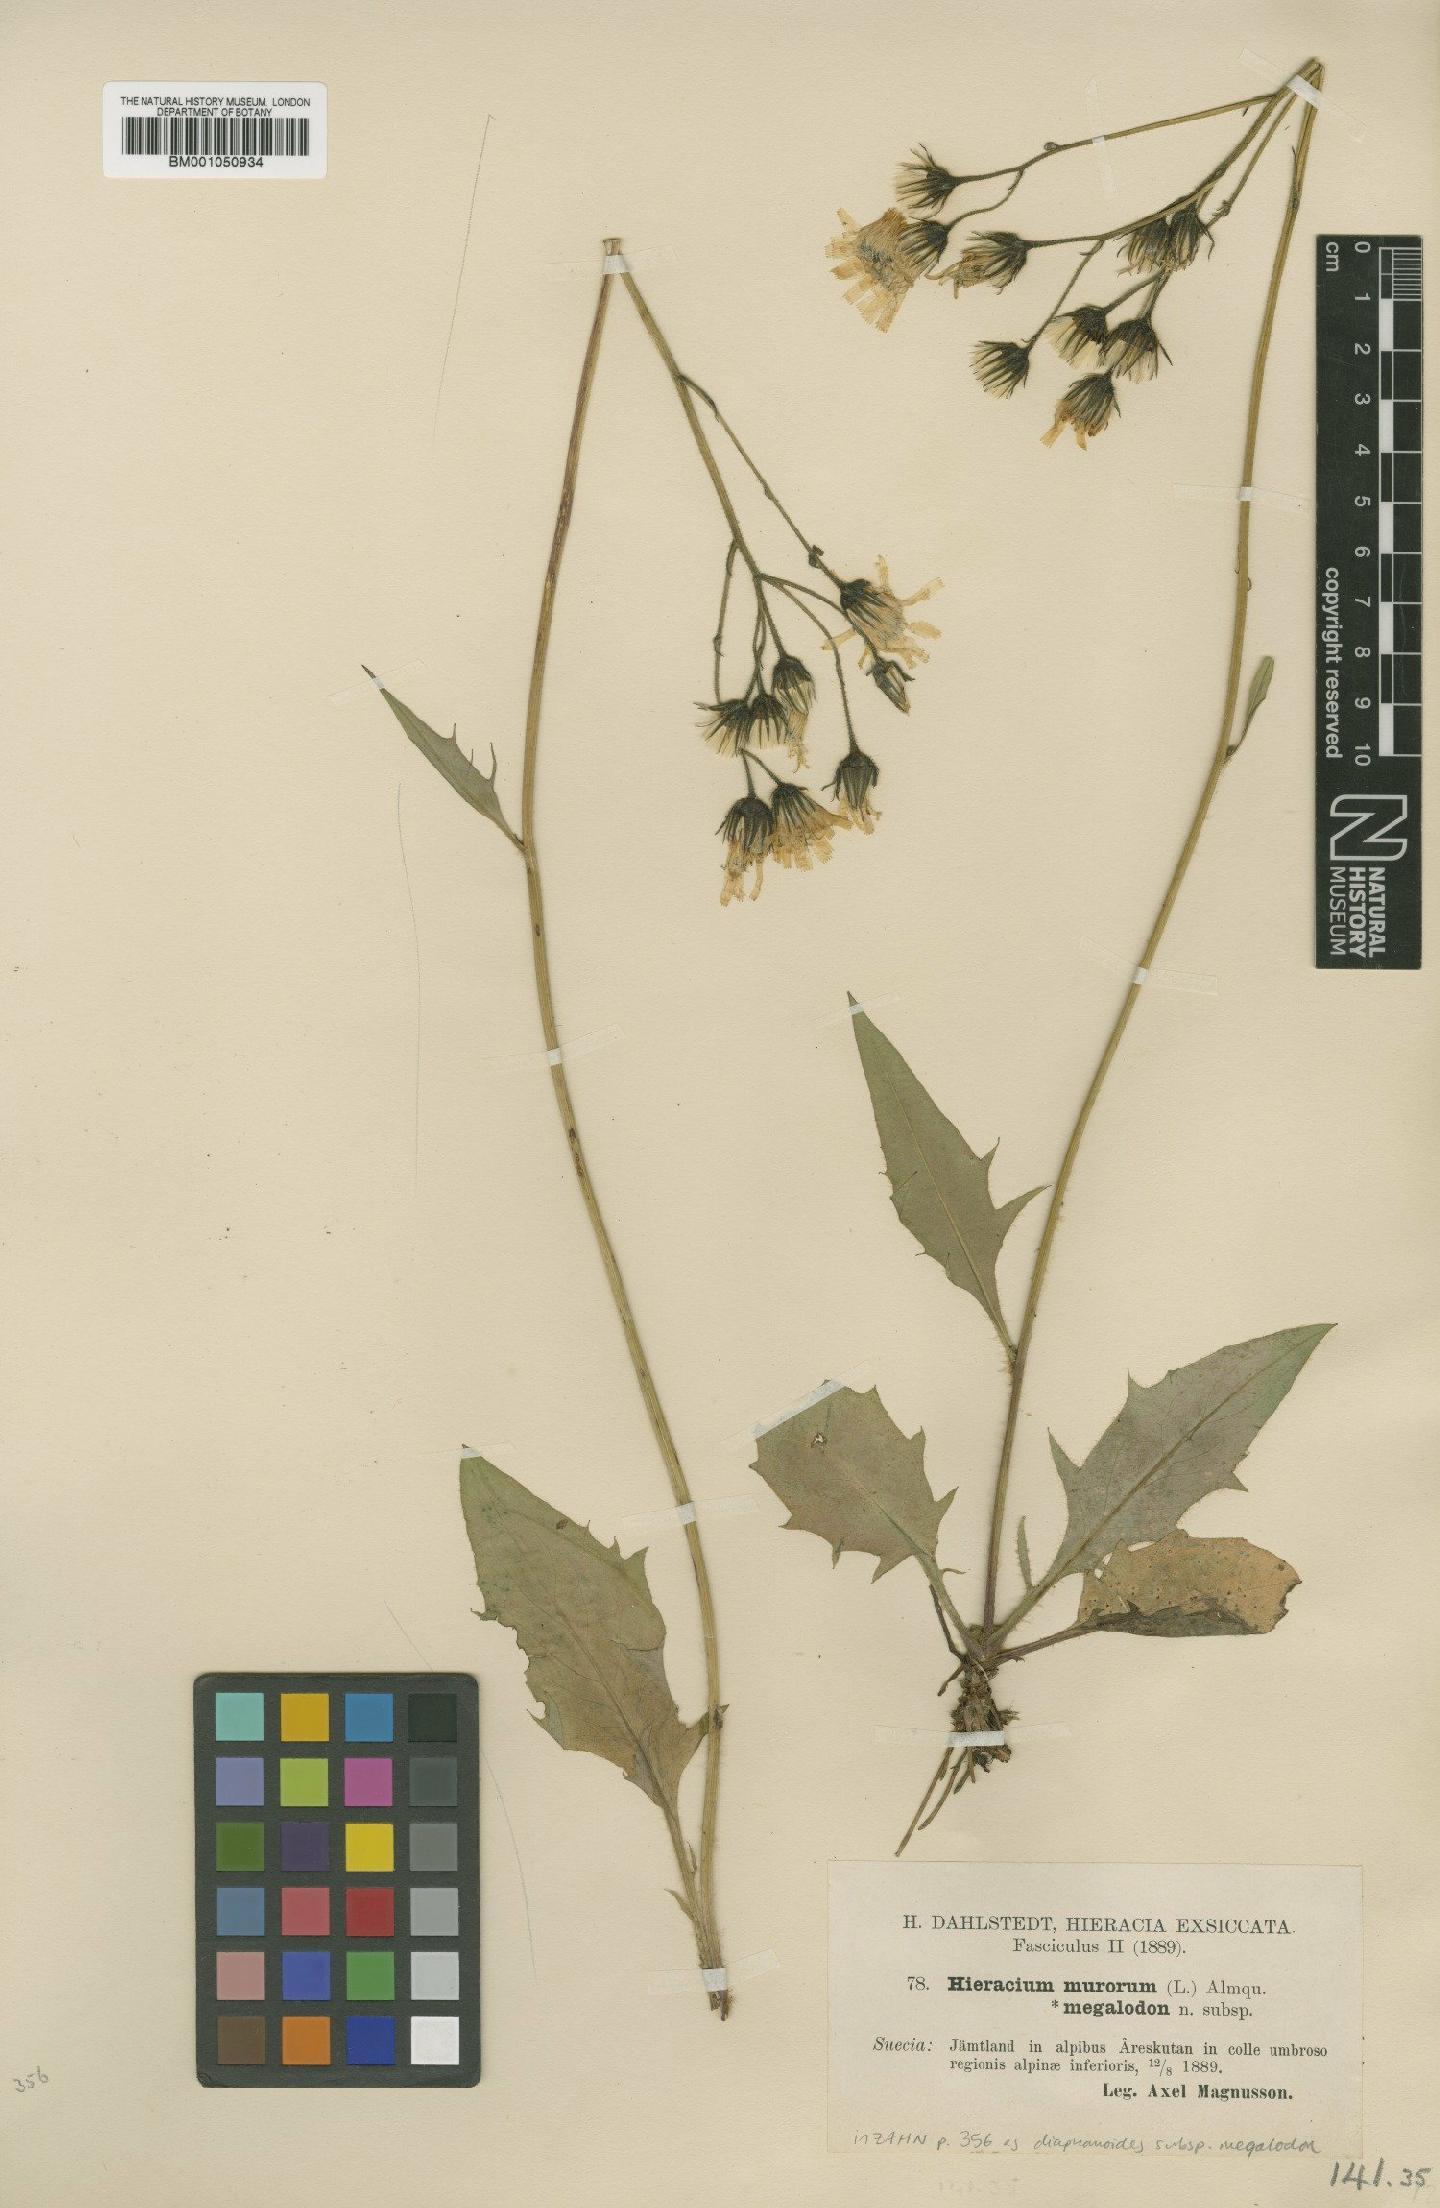 To NHMUK collection (Hieracium diaphanoides subsp. megalodon Dahlst.; TYPE; NHMUK:ecatalogue:2413463)